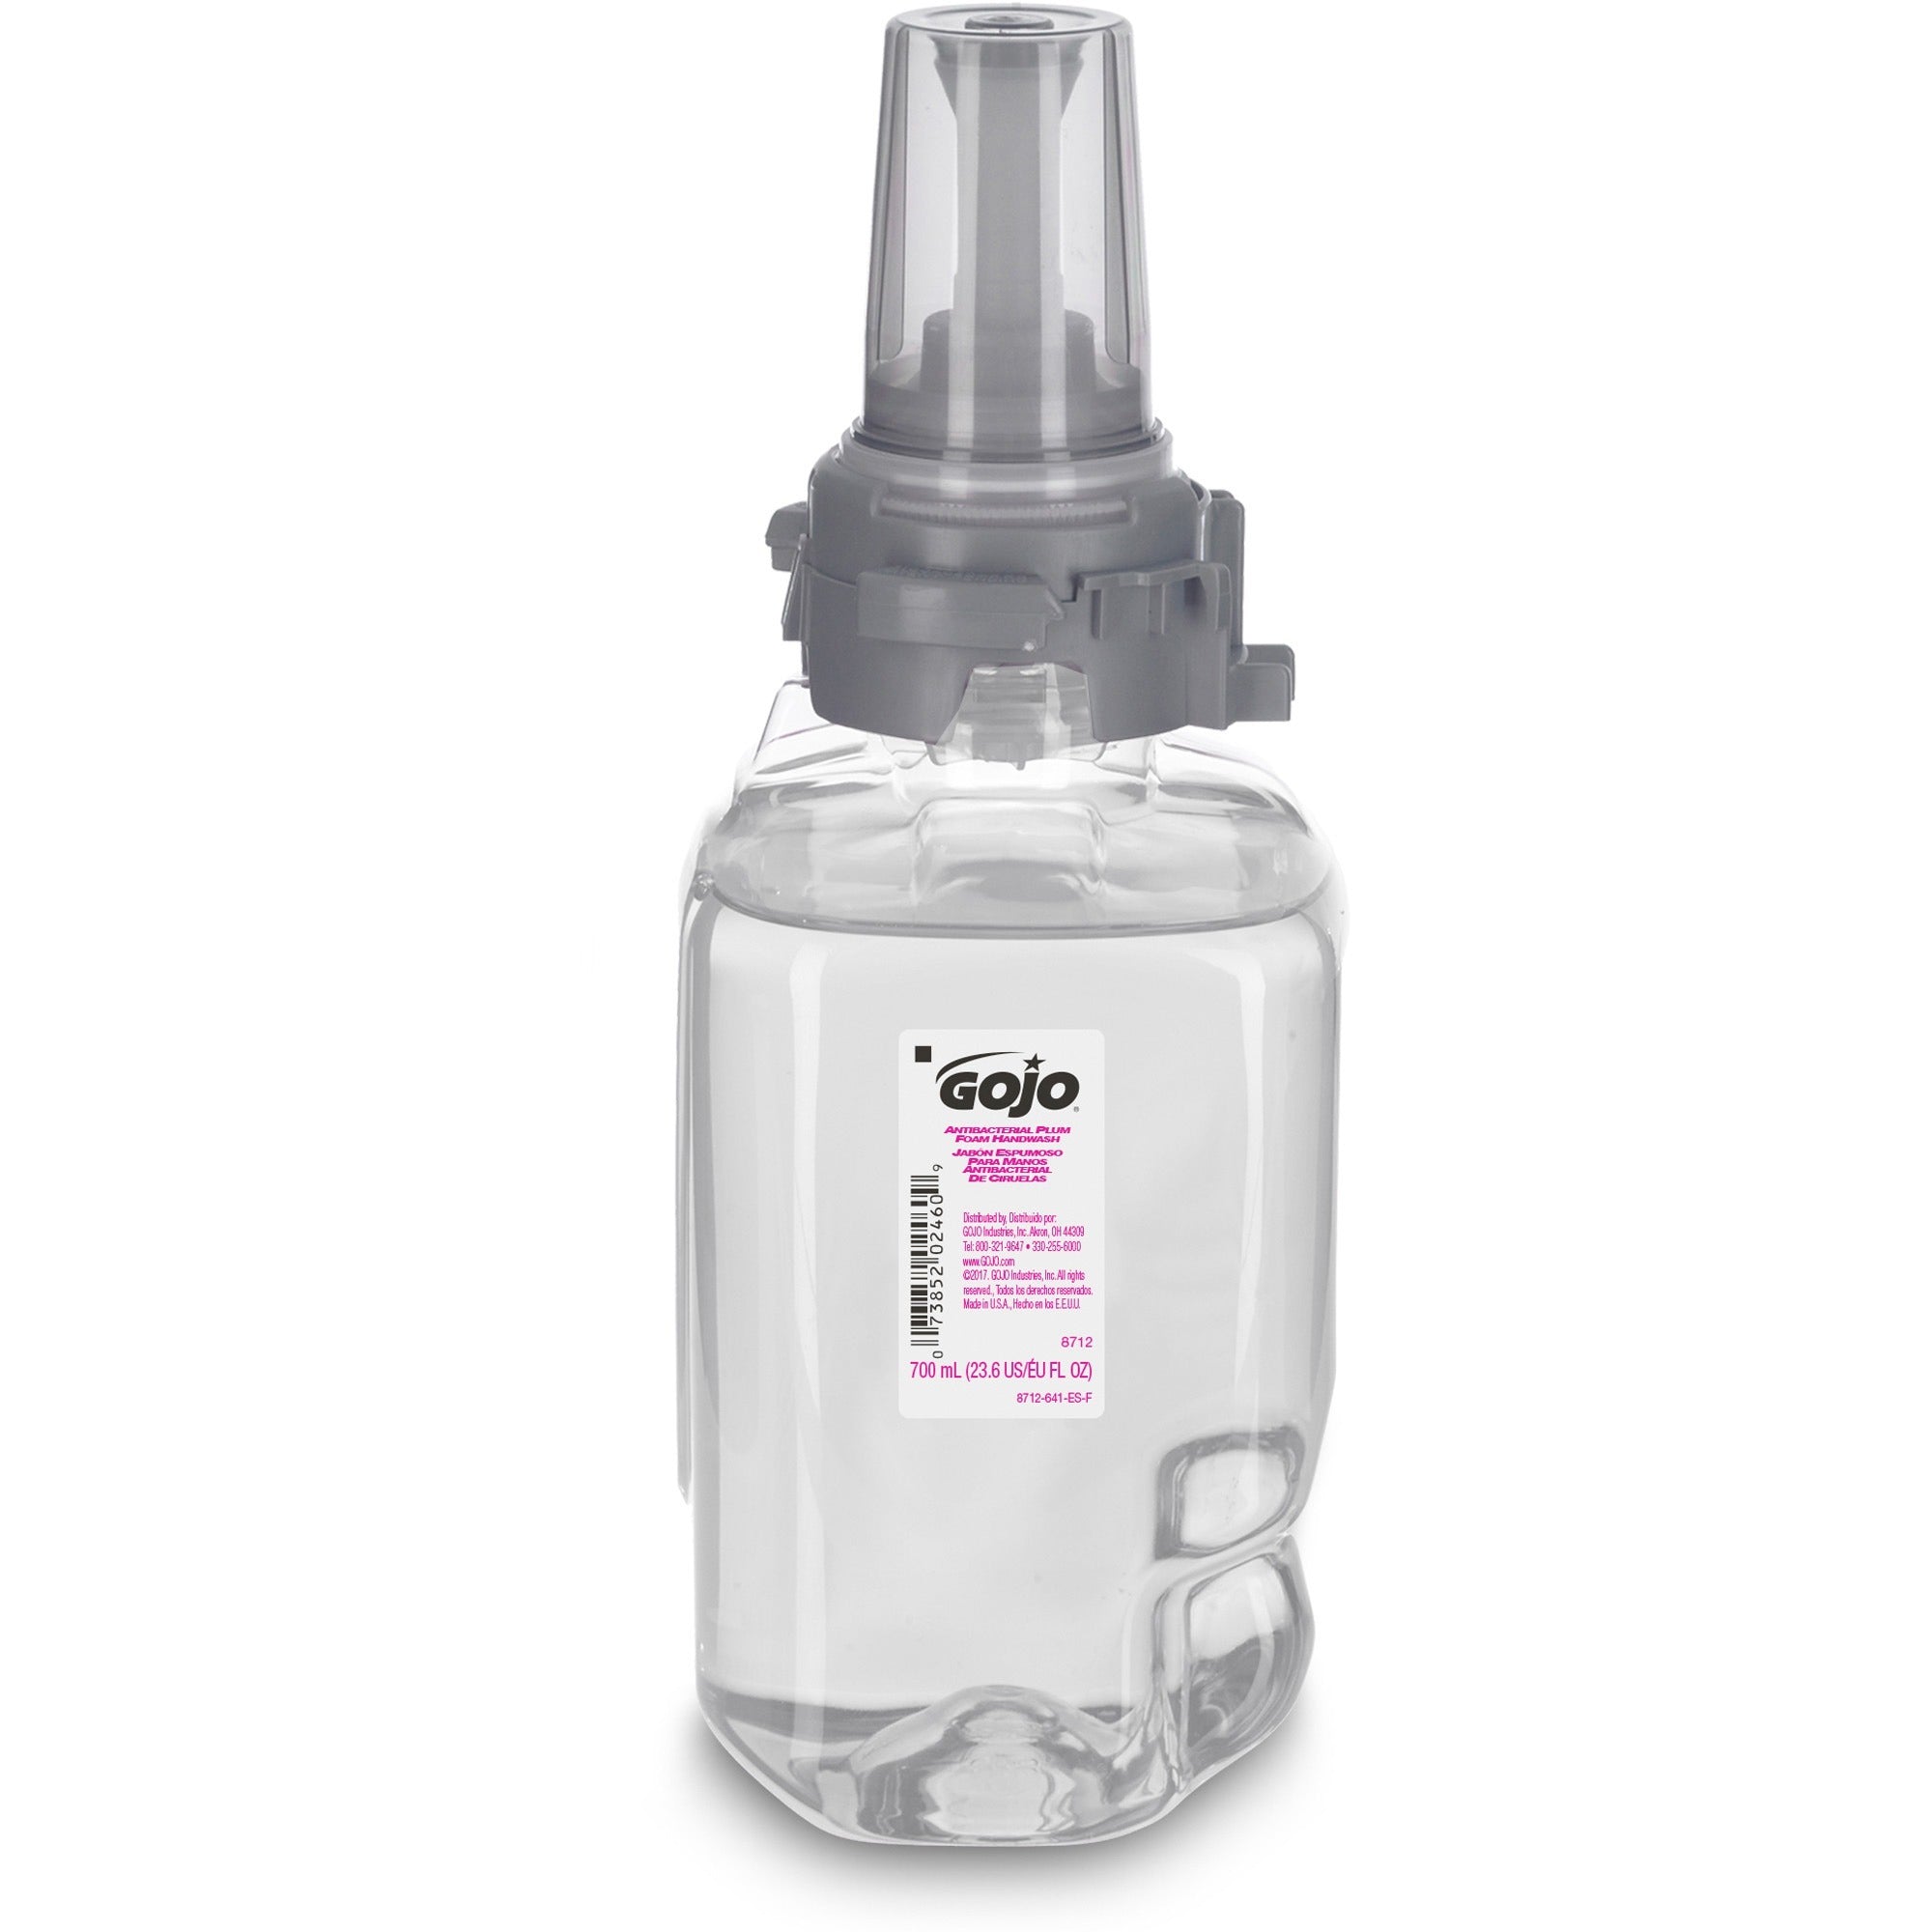 gojo-adx-7-dispenser-antibacterial-hand-soap-refill-plum-scentfor-237-fl-oz-700-ml-pump-bottle-dispenser-bacteria-remover-kill-germs-hand-skin-moisturizing-antibacterial-clear-rich-lather-bio-based-4-carton_goj871204ct - 1